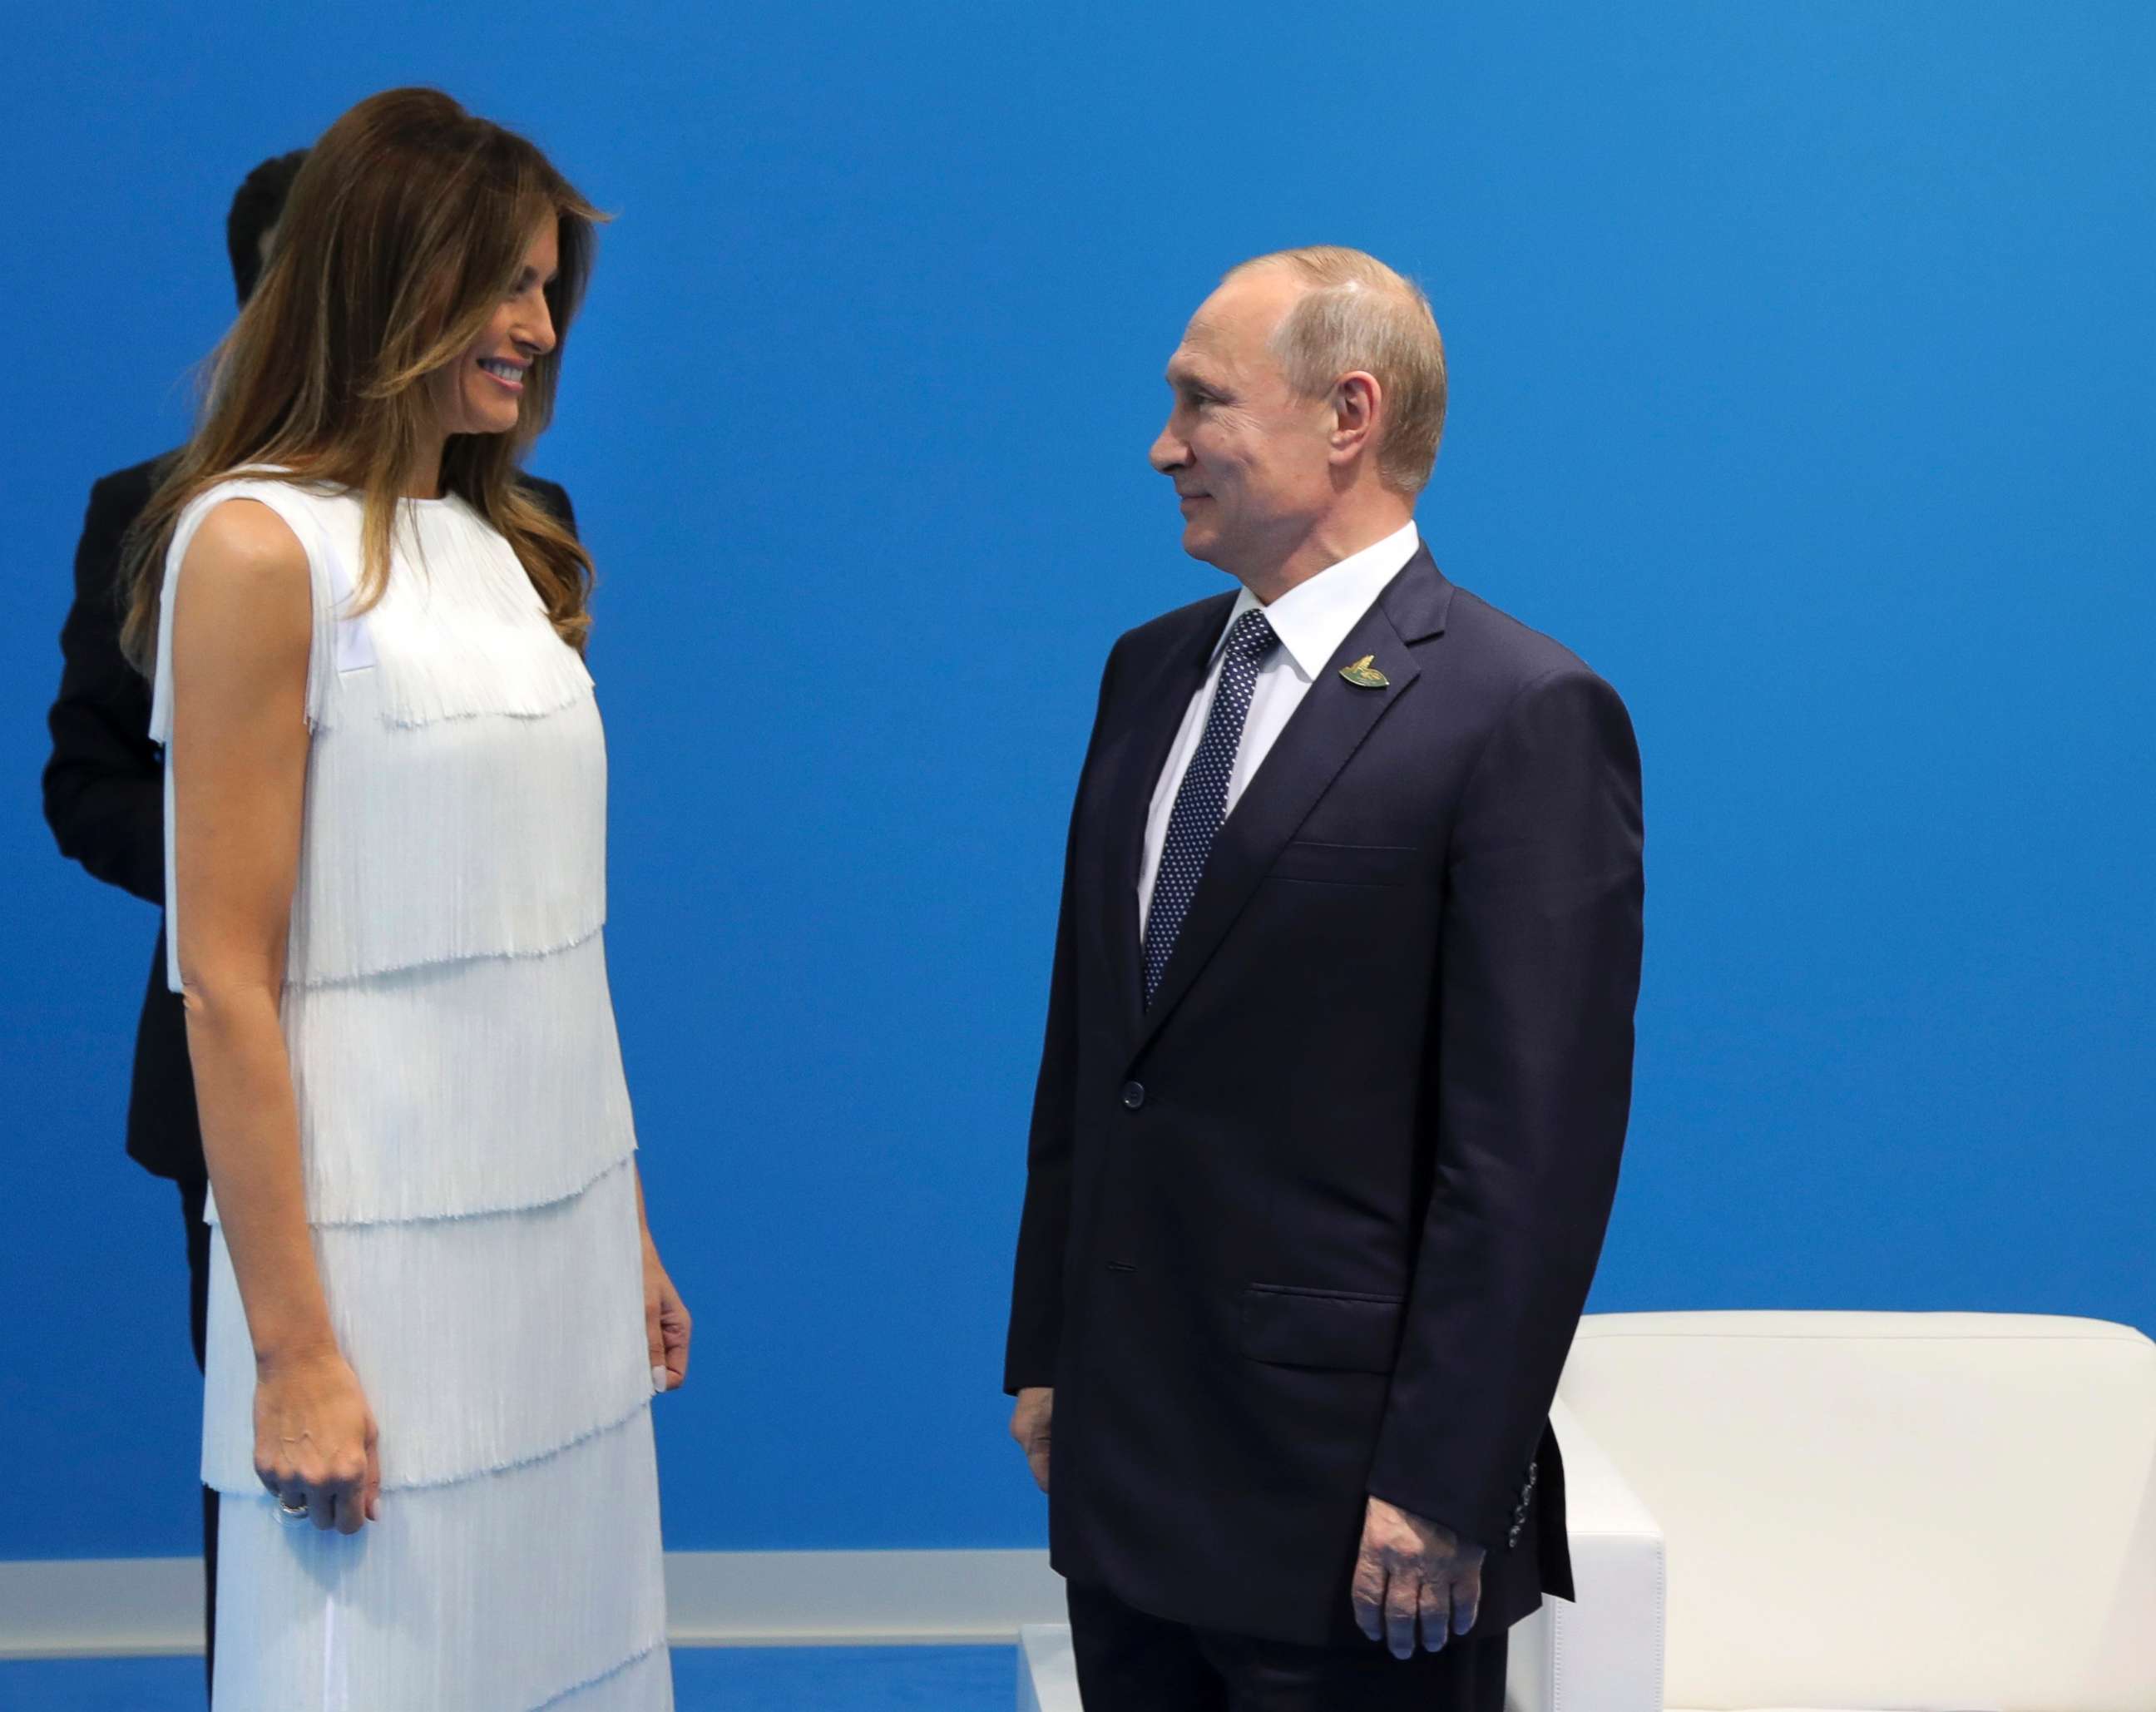 PHOTO: Russian President Vladimir Putin greets first lady Melania Trump during the G20 summit in Hamburg Germany, July 7, 2017.